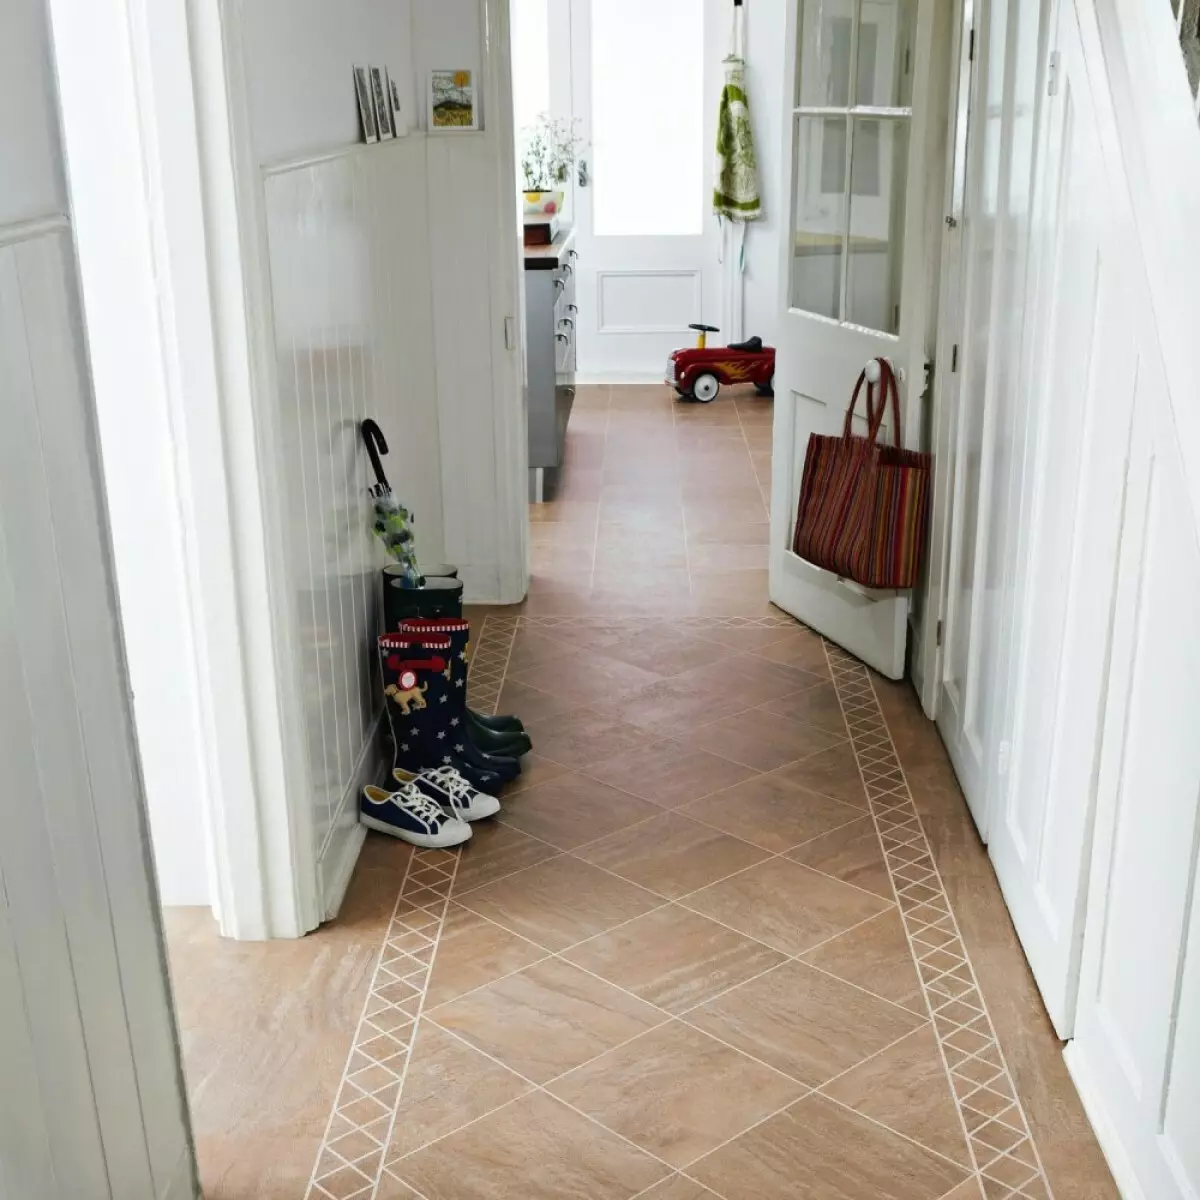 Pločice na podu u hodniku (99 fotografija): Opcije za dizajn poda u hodniku. Obrasci izrađeni od porculanskih kamenih softvera, pločica i drugih prekrasnih opcija 9181_80